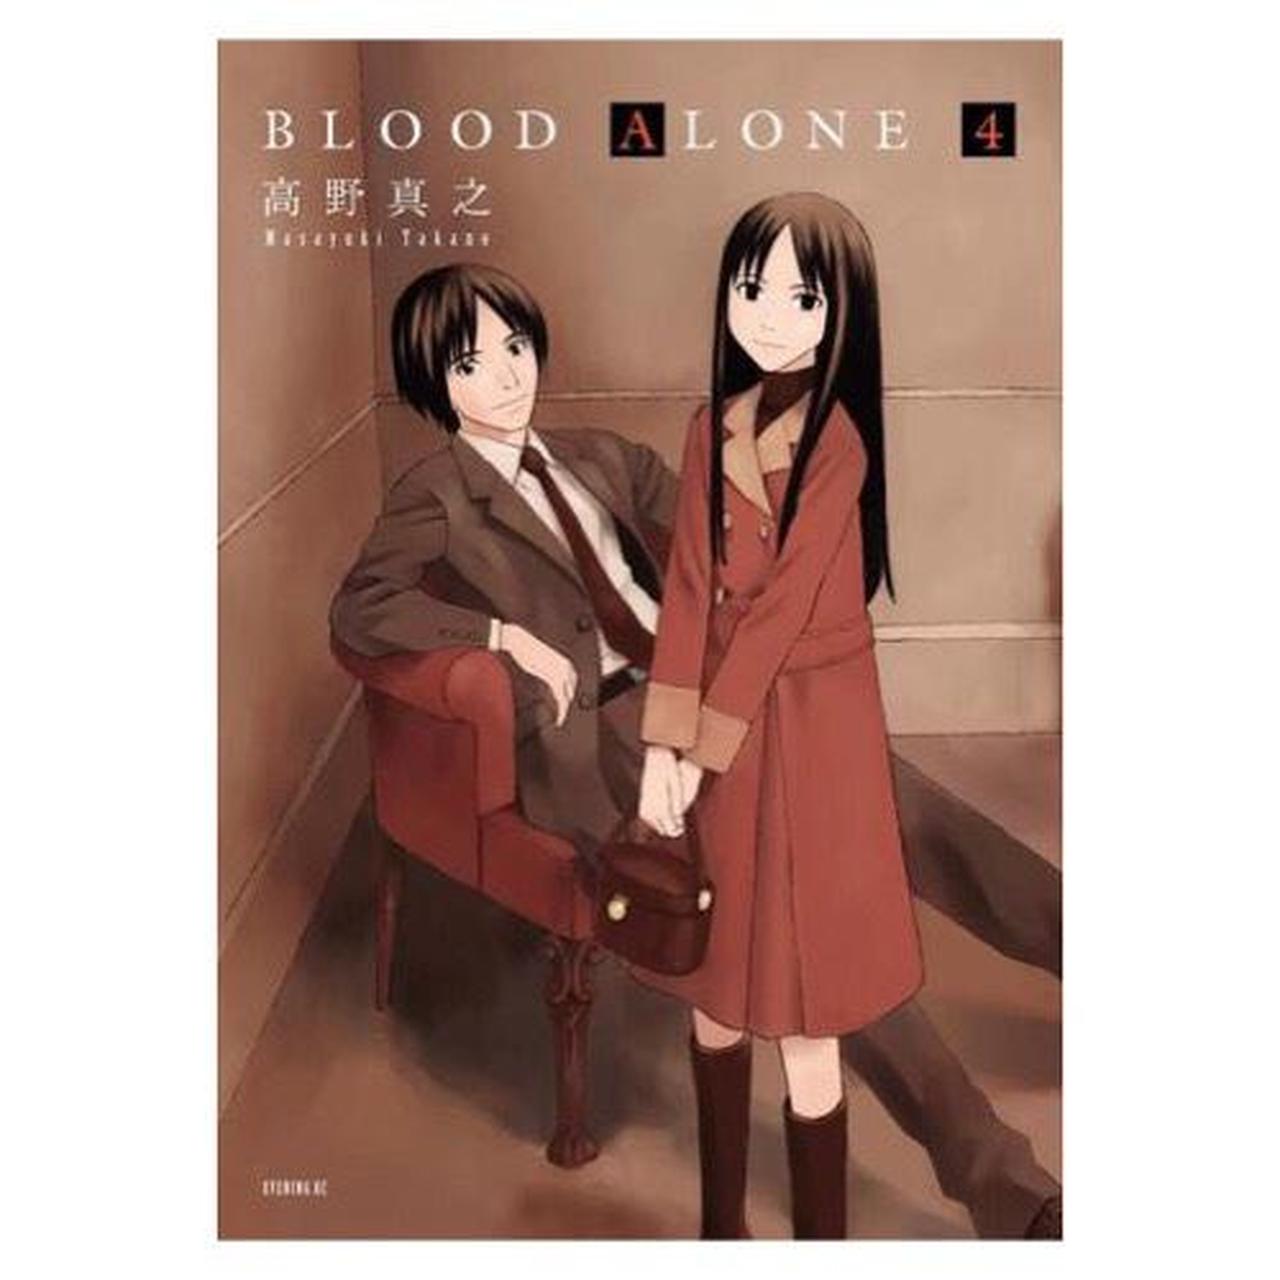 Blood Lad (Manga) 𝔭𝔩𝔰 𝔯𝔢𝔞𝔡 𝔟𝔦𝔬 𝔟𝔢𝔣𝔬𝔯𝔢  𝔭𝔲𝔯𝔠𝔥𝔞𝔰𝔦𝔫𝔤, - Depop